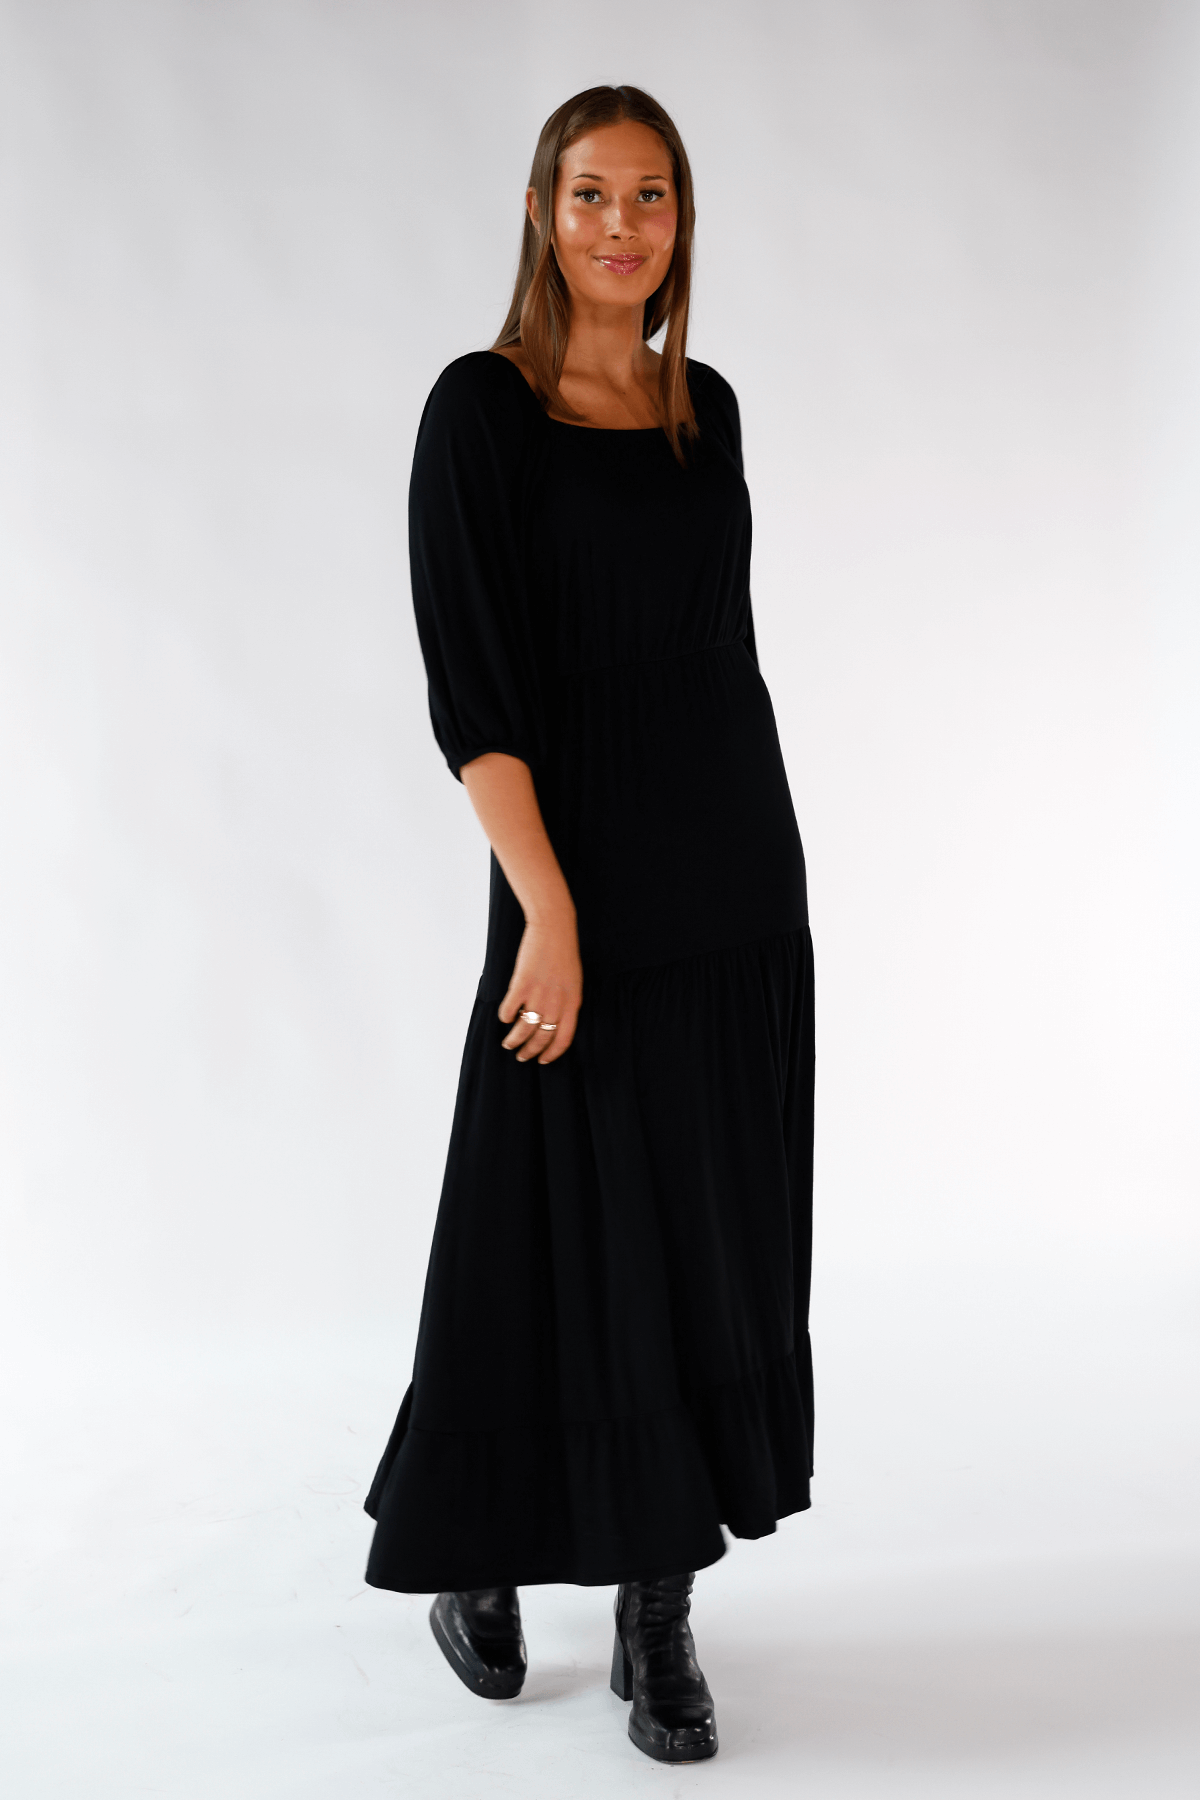 Gunn fantastic black elegant dress from ko:ko norway - KO:KO